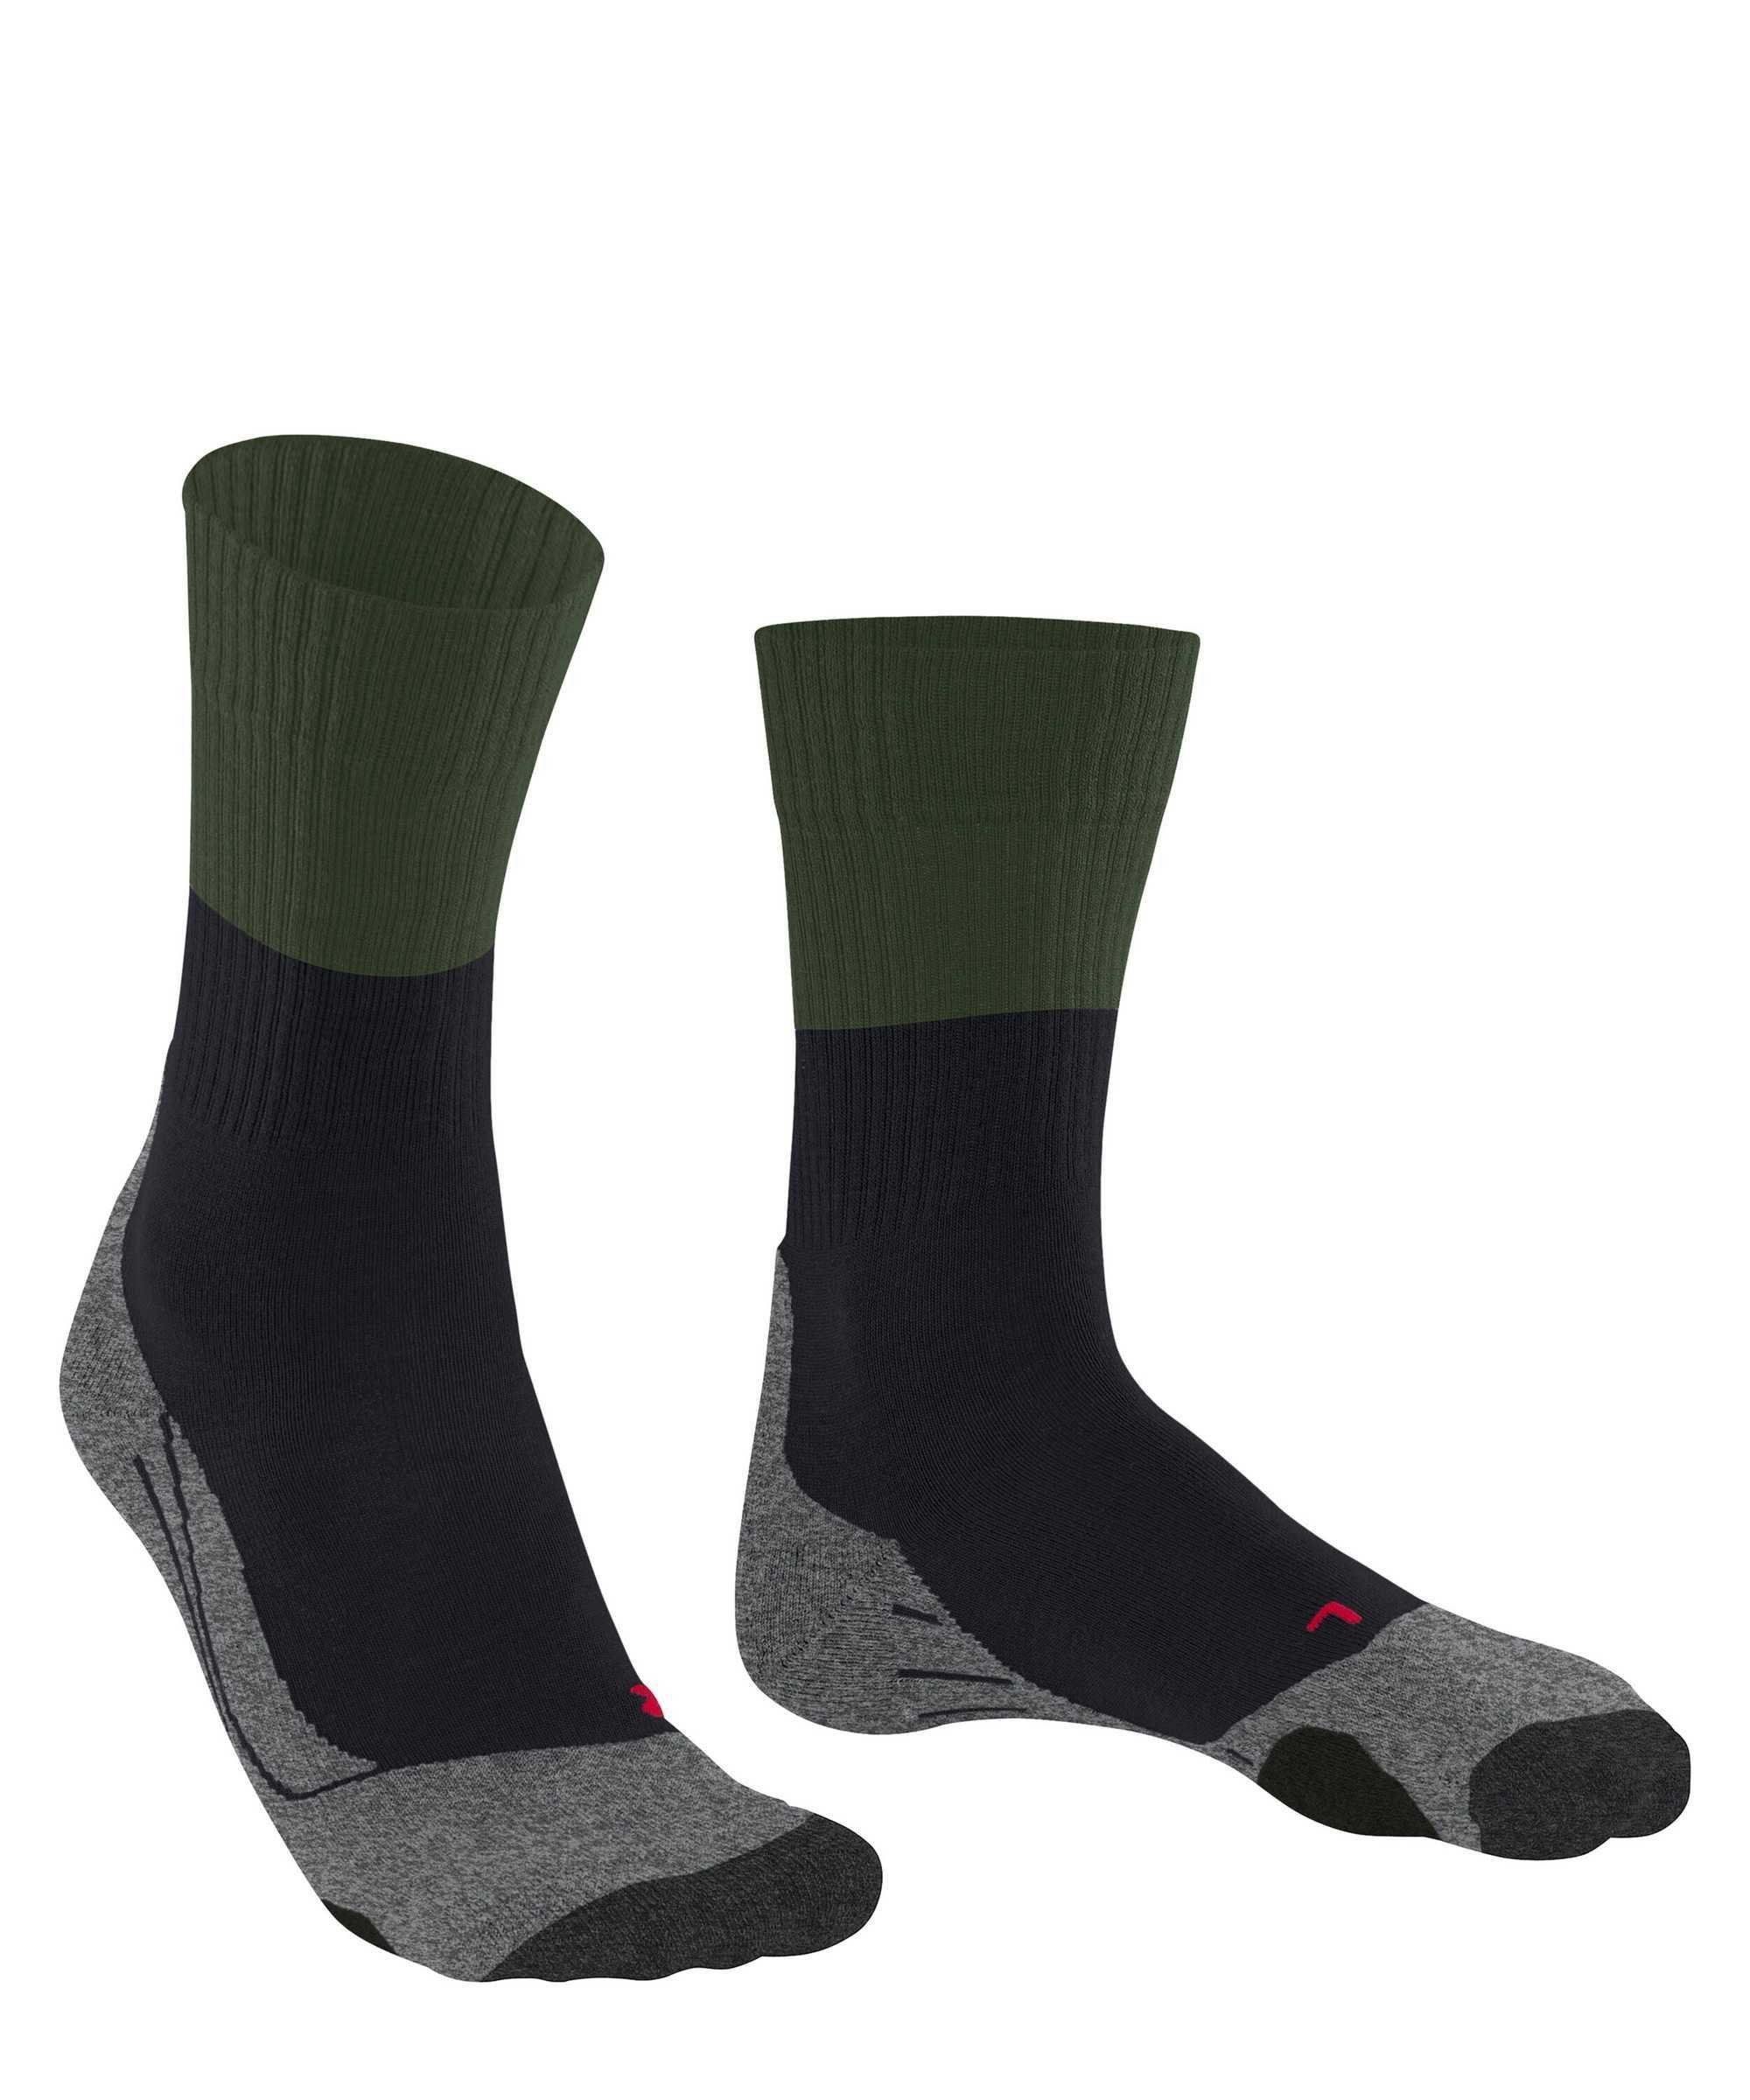 Schwarz/Grau/Grün Herren (Vertigo) Sportsocken - Trekking Socken Polsterung TK2, FALKE Socken